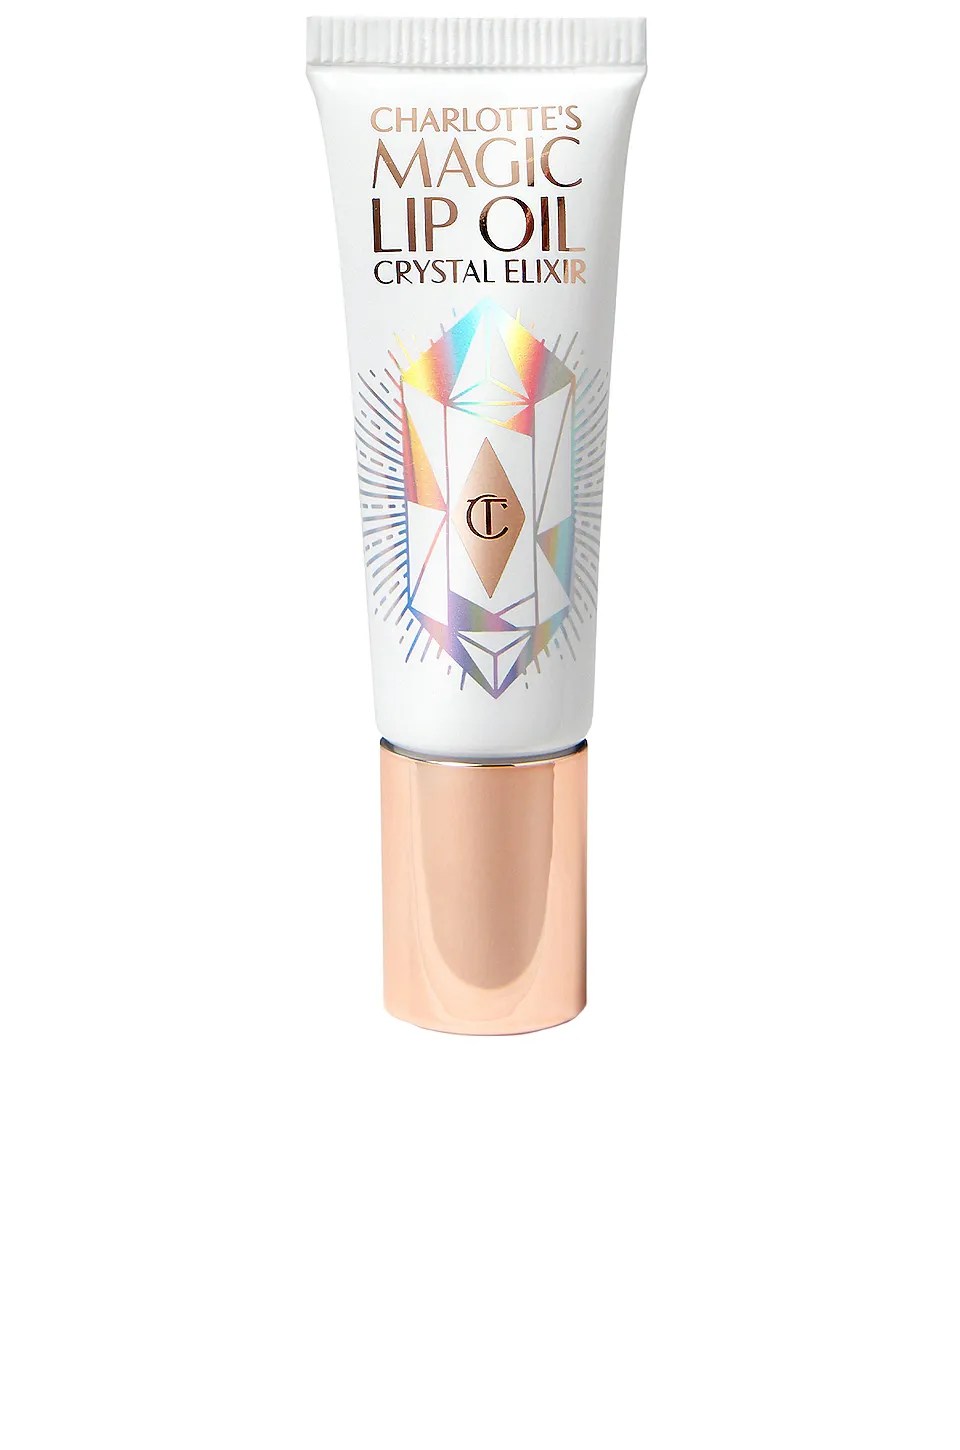 Charlotte Tilbury, Charlotte’s Magic Lip Oil Crystal Elixir (Source: www.revolve.com)